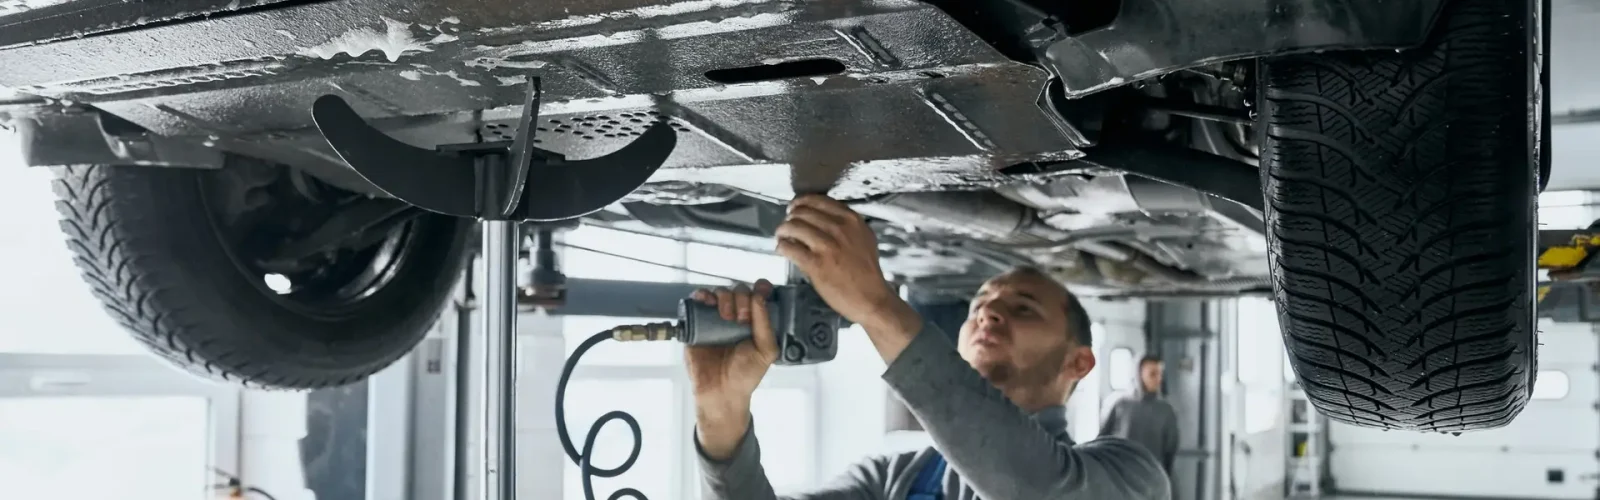 Car Suspension Repair Cost - What to Expect?Competent mechanic in blue overalls repairing car suspension